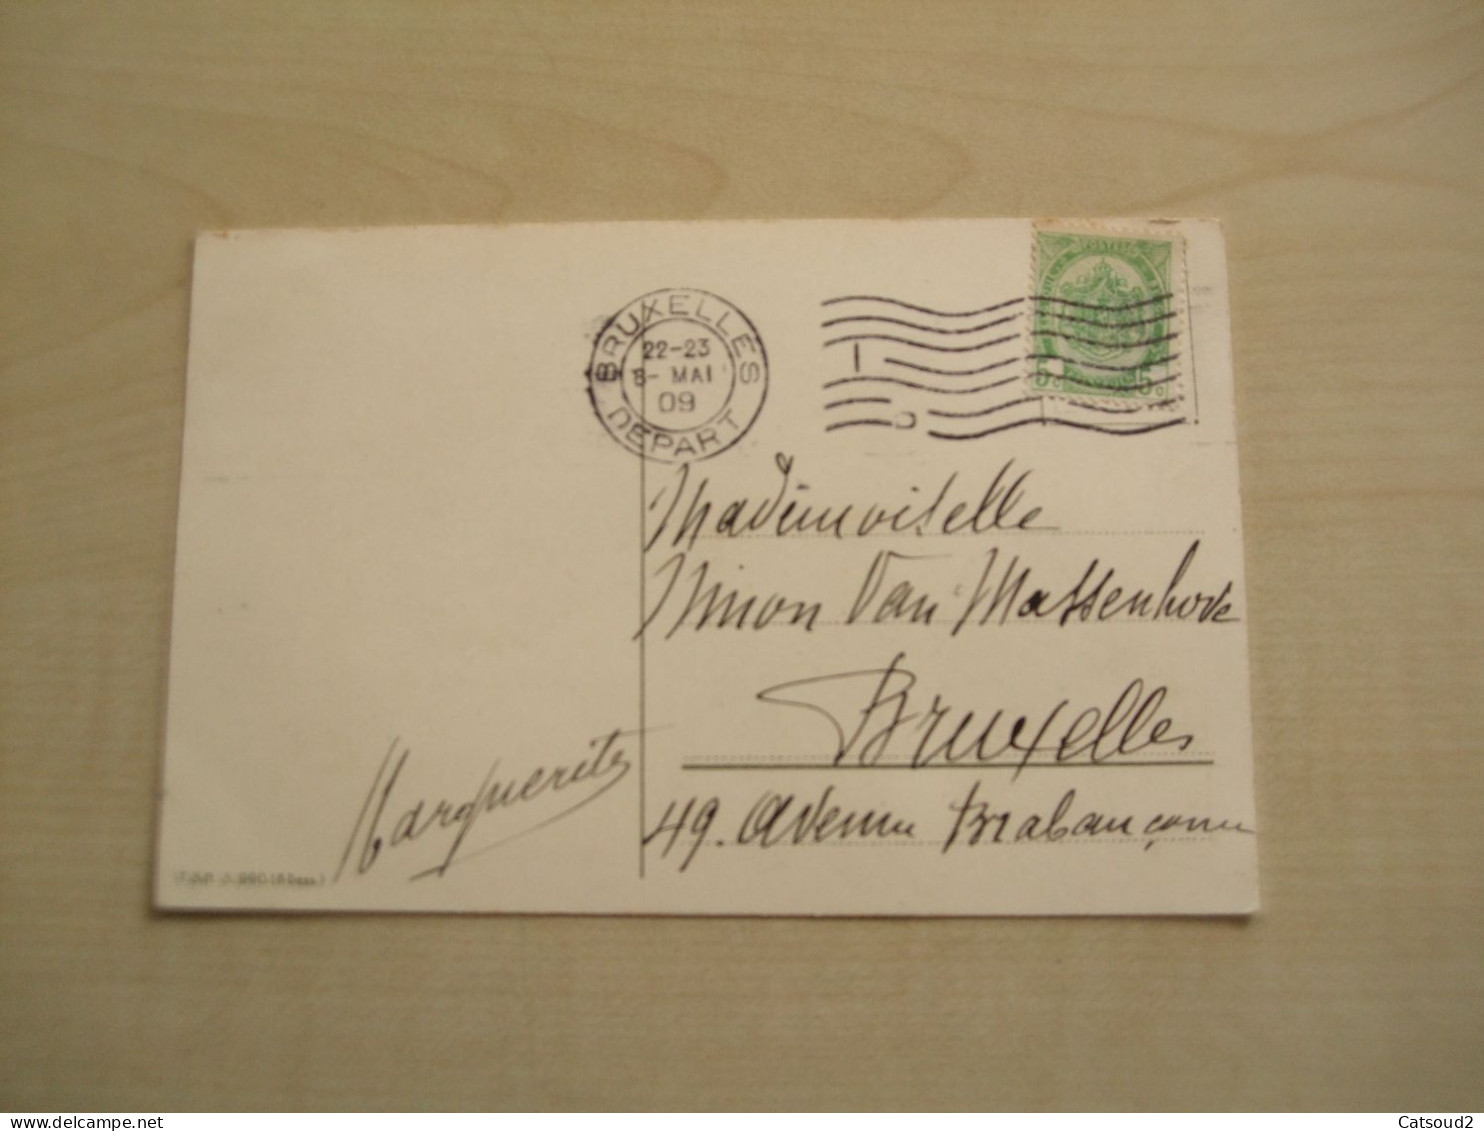 Carte Postale Ancienne 1909 CATHARINA KLEIN Roses - Klein, Catharina